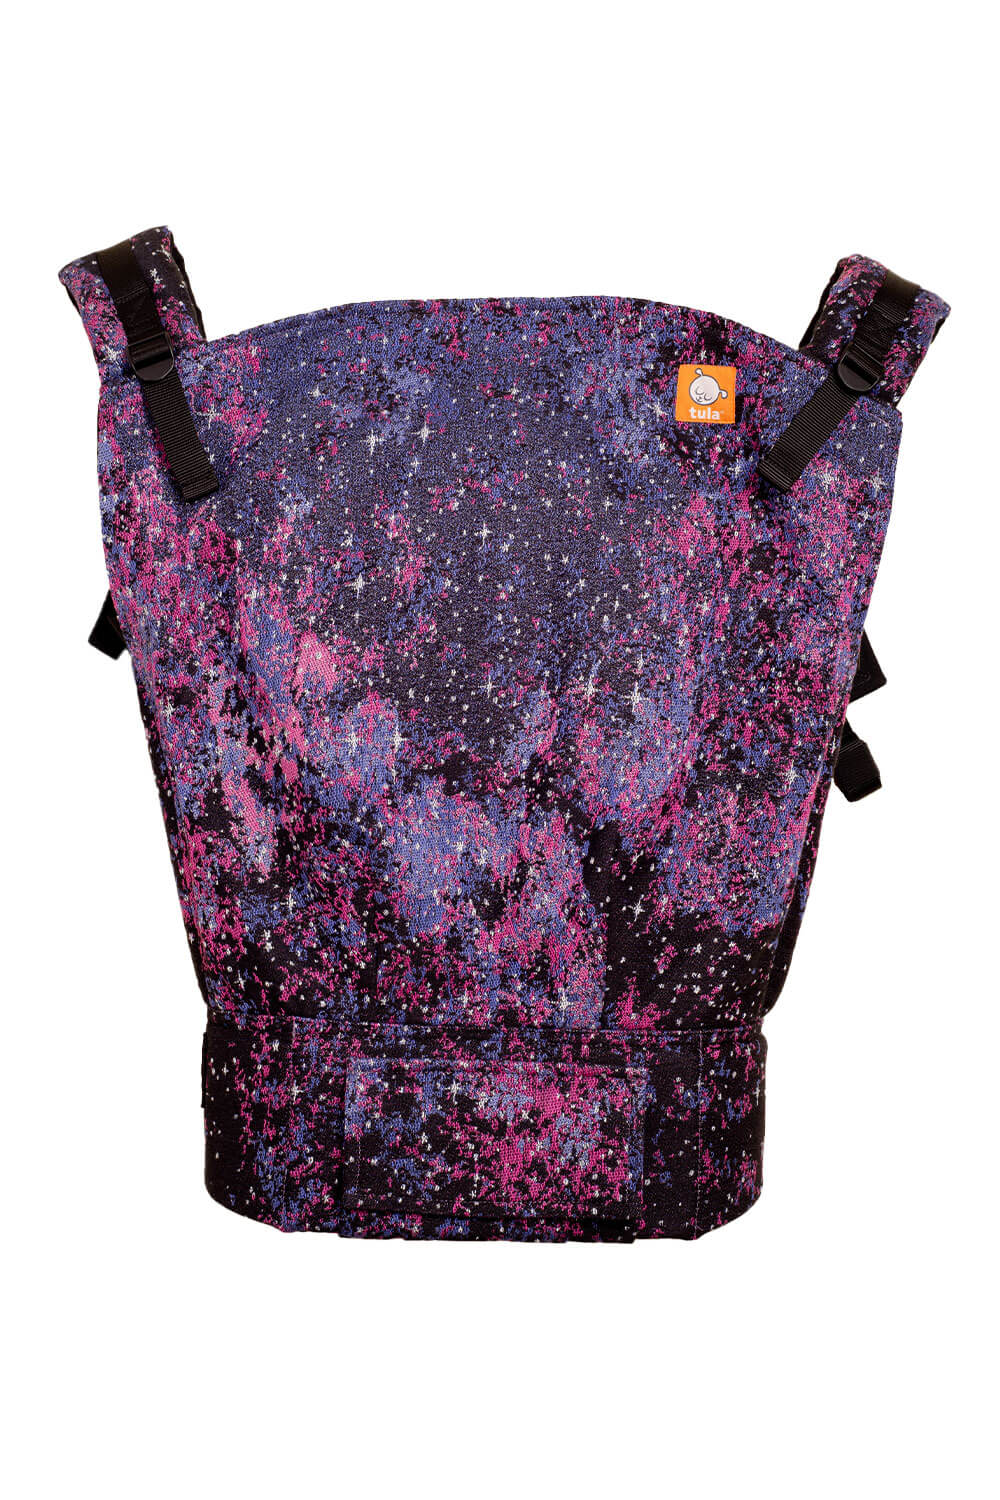 Nebula - Signature Woven Preschool Carrier